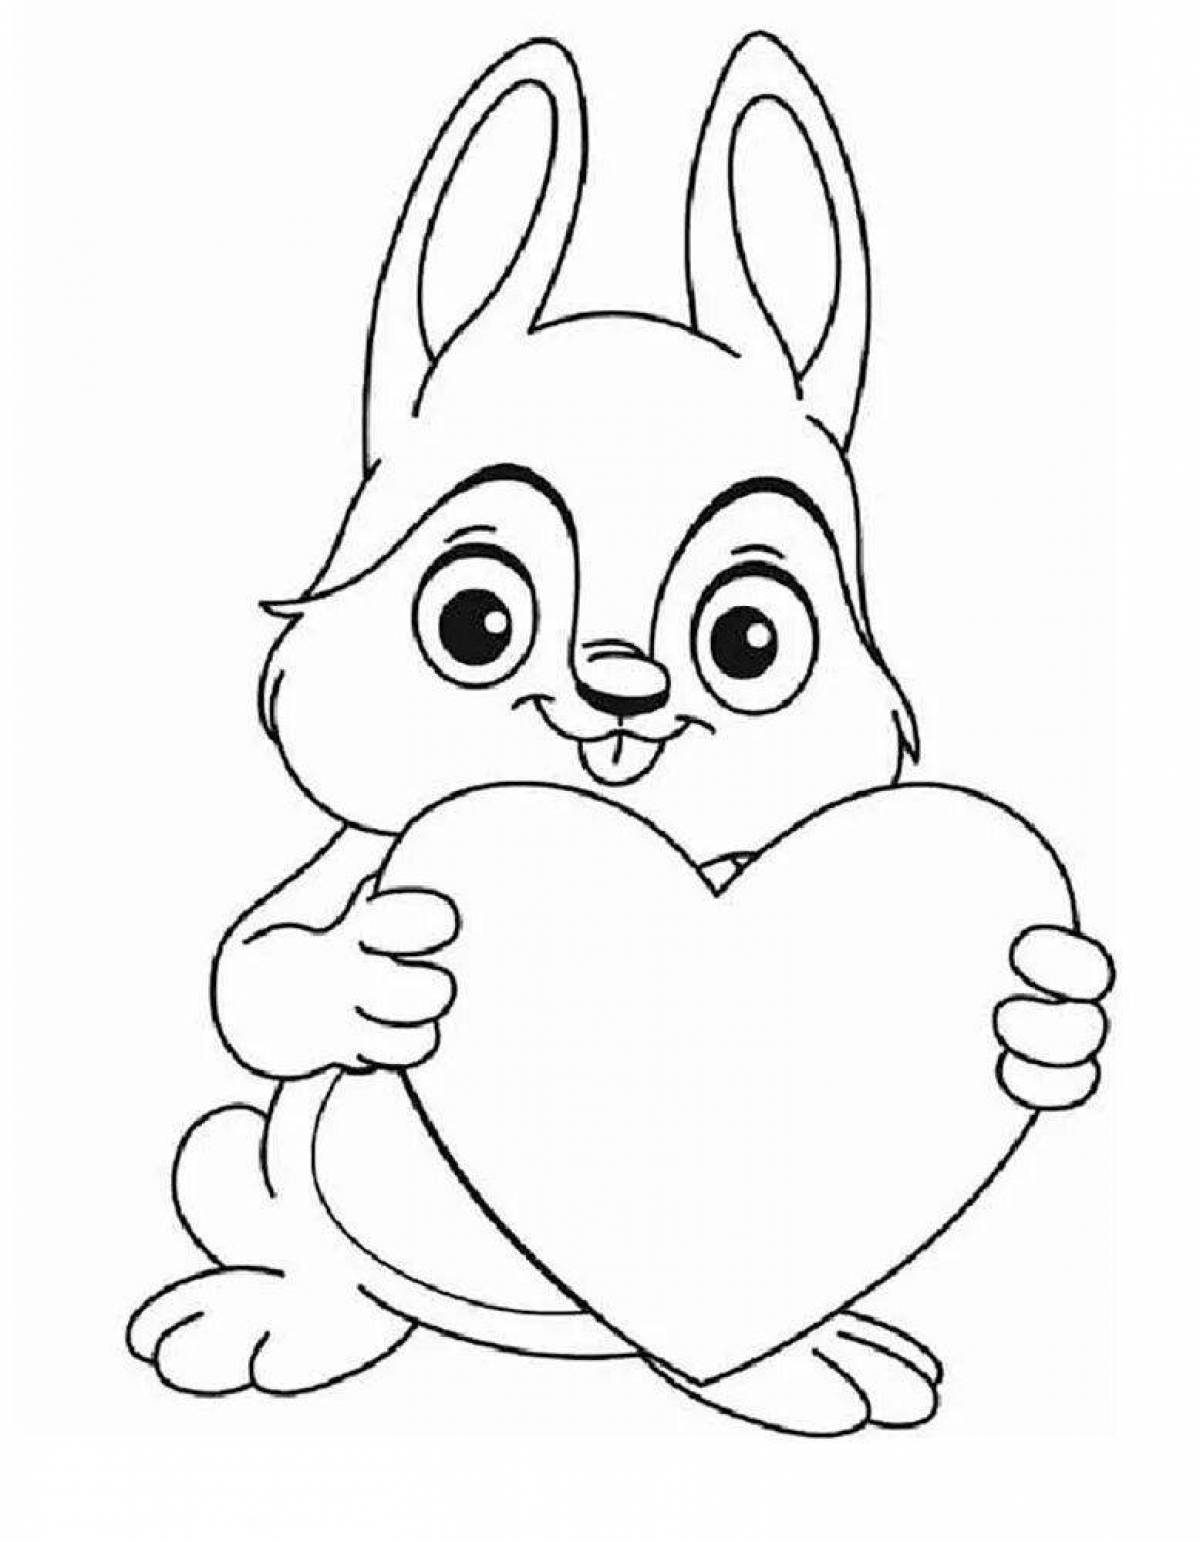 Bunny with a heart #11